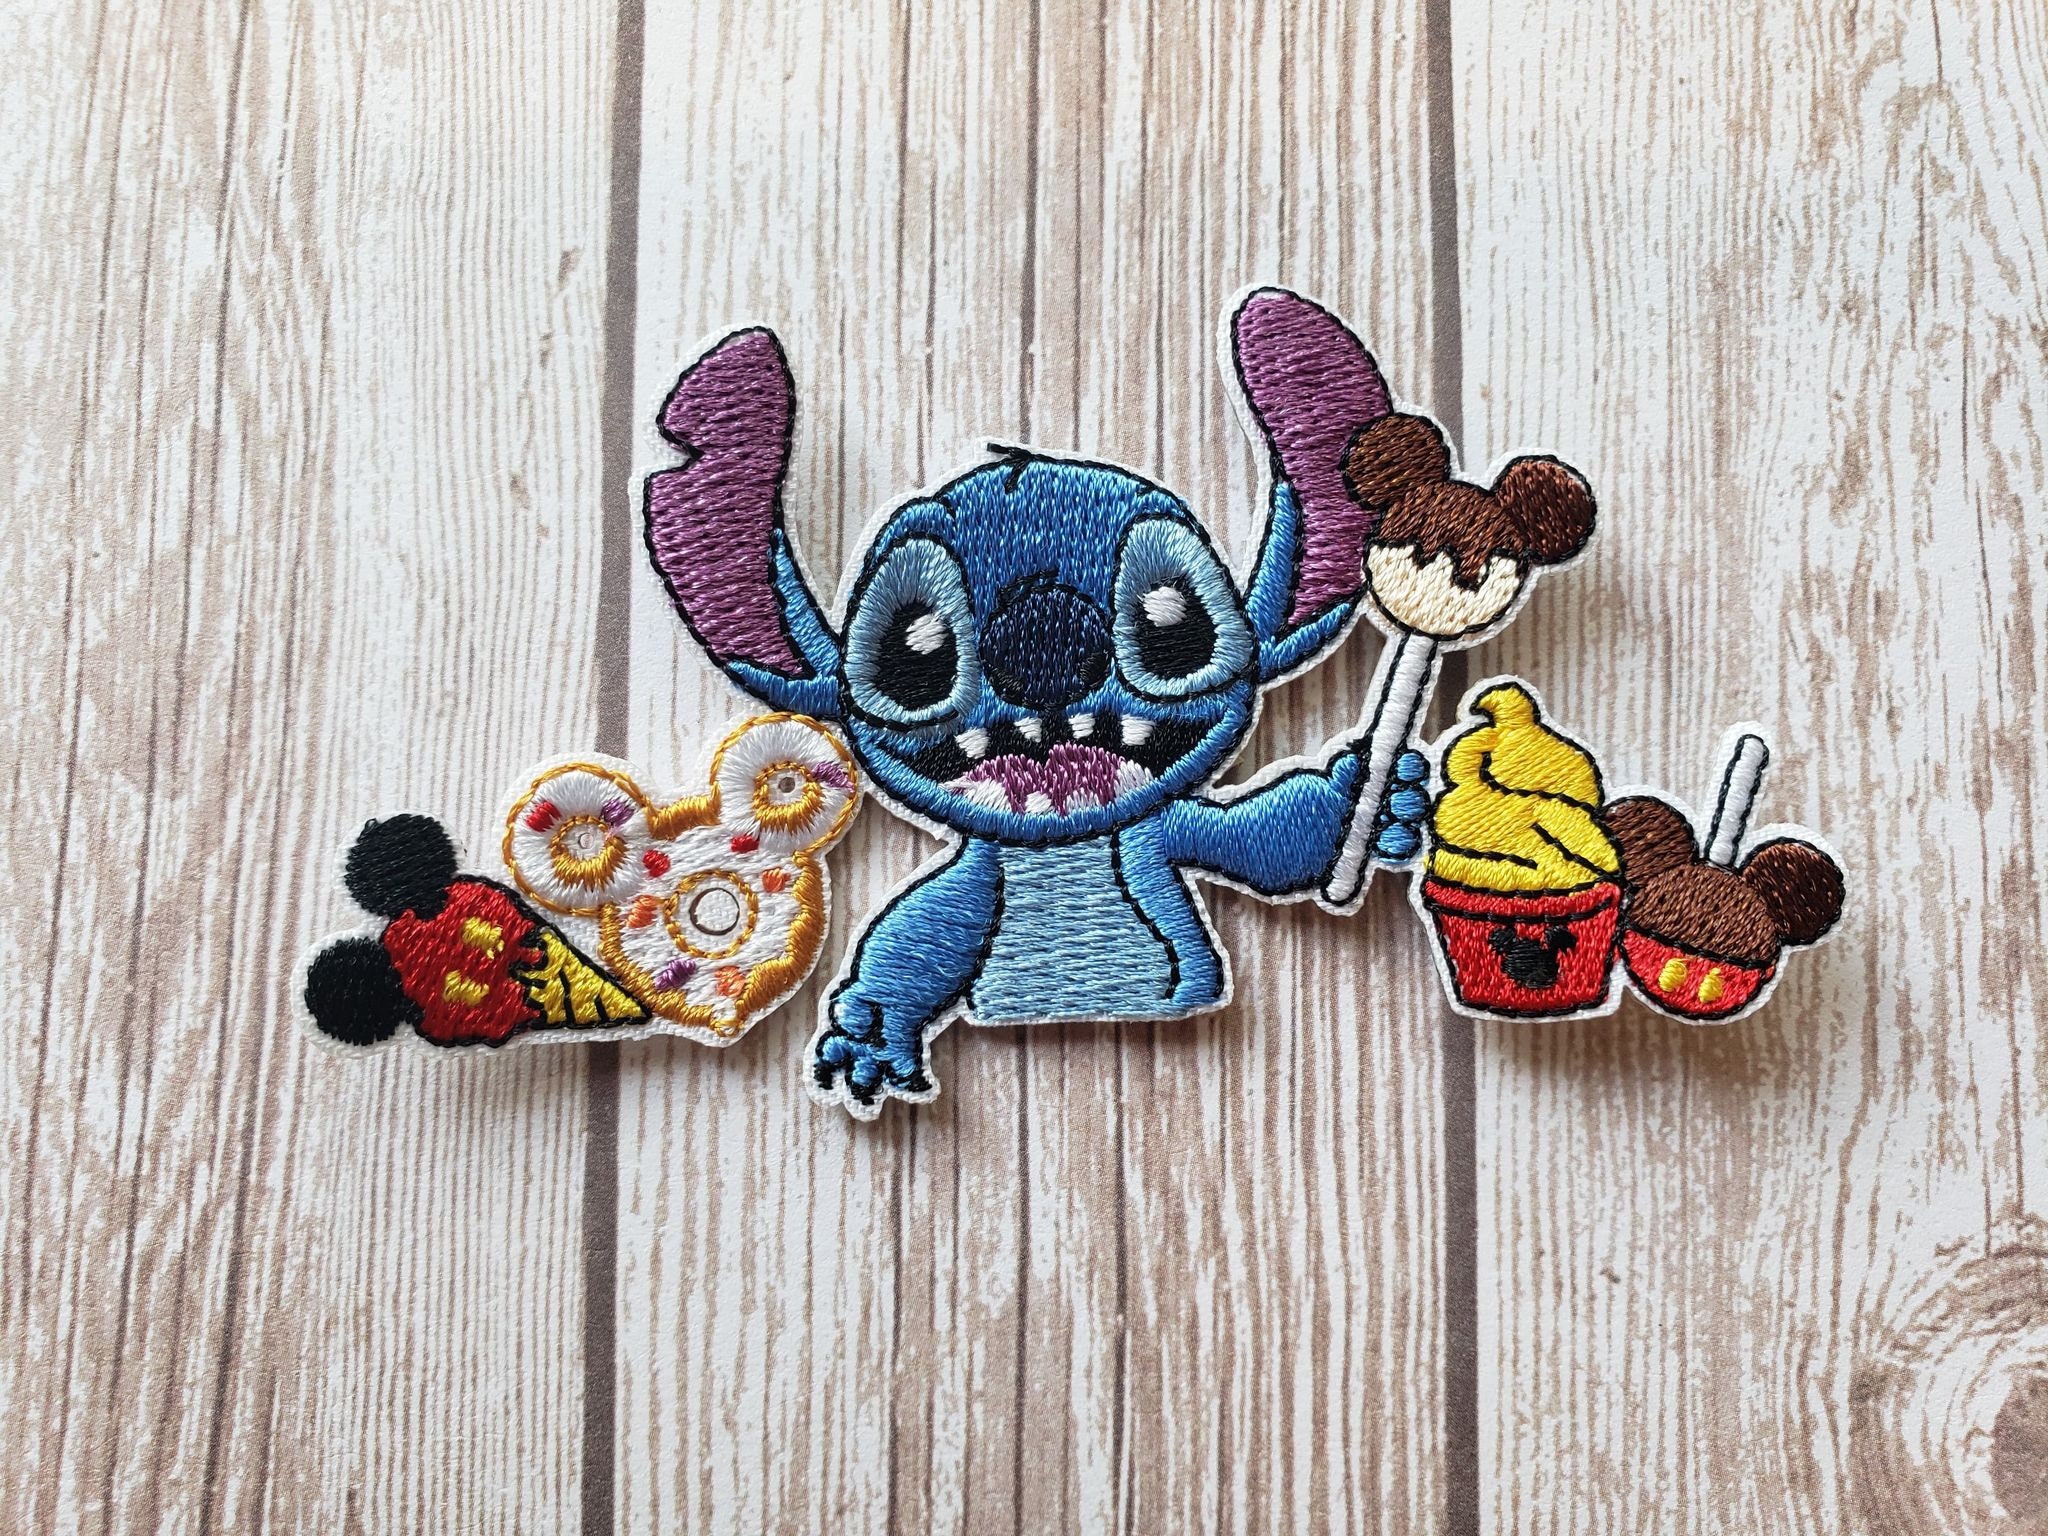 Verre Stitch Lilo Et Stitch Disney Japon - Cutie Galaxie